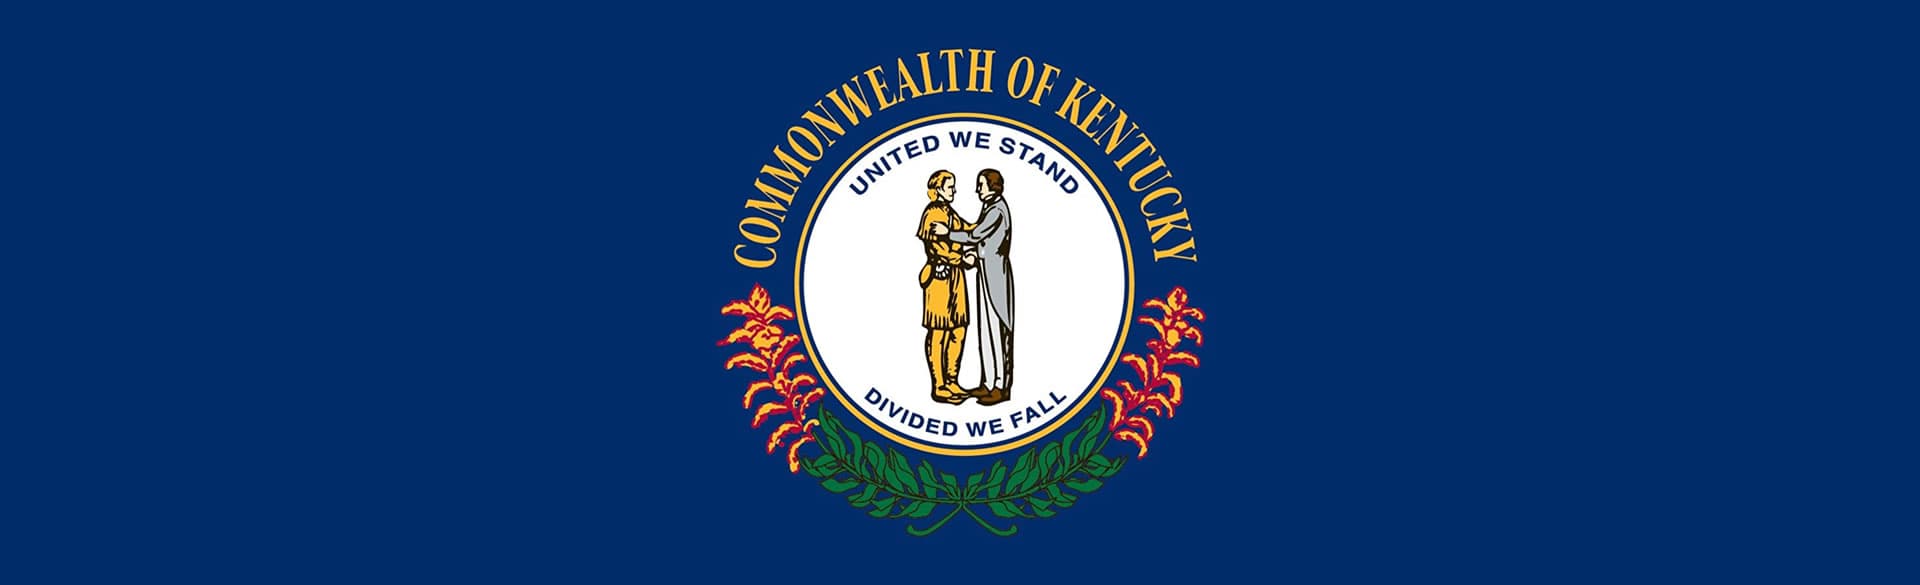 The Commonwealth of Kentucky